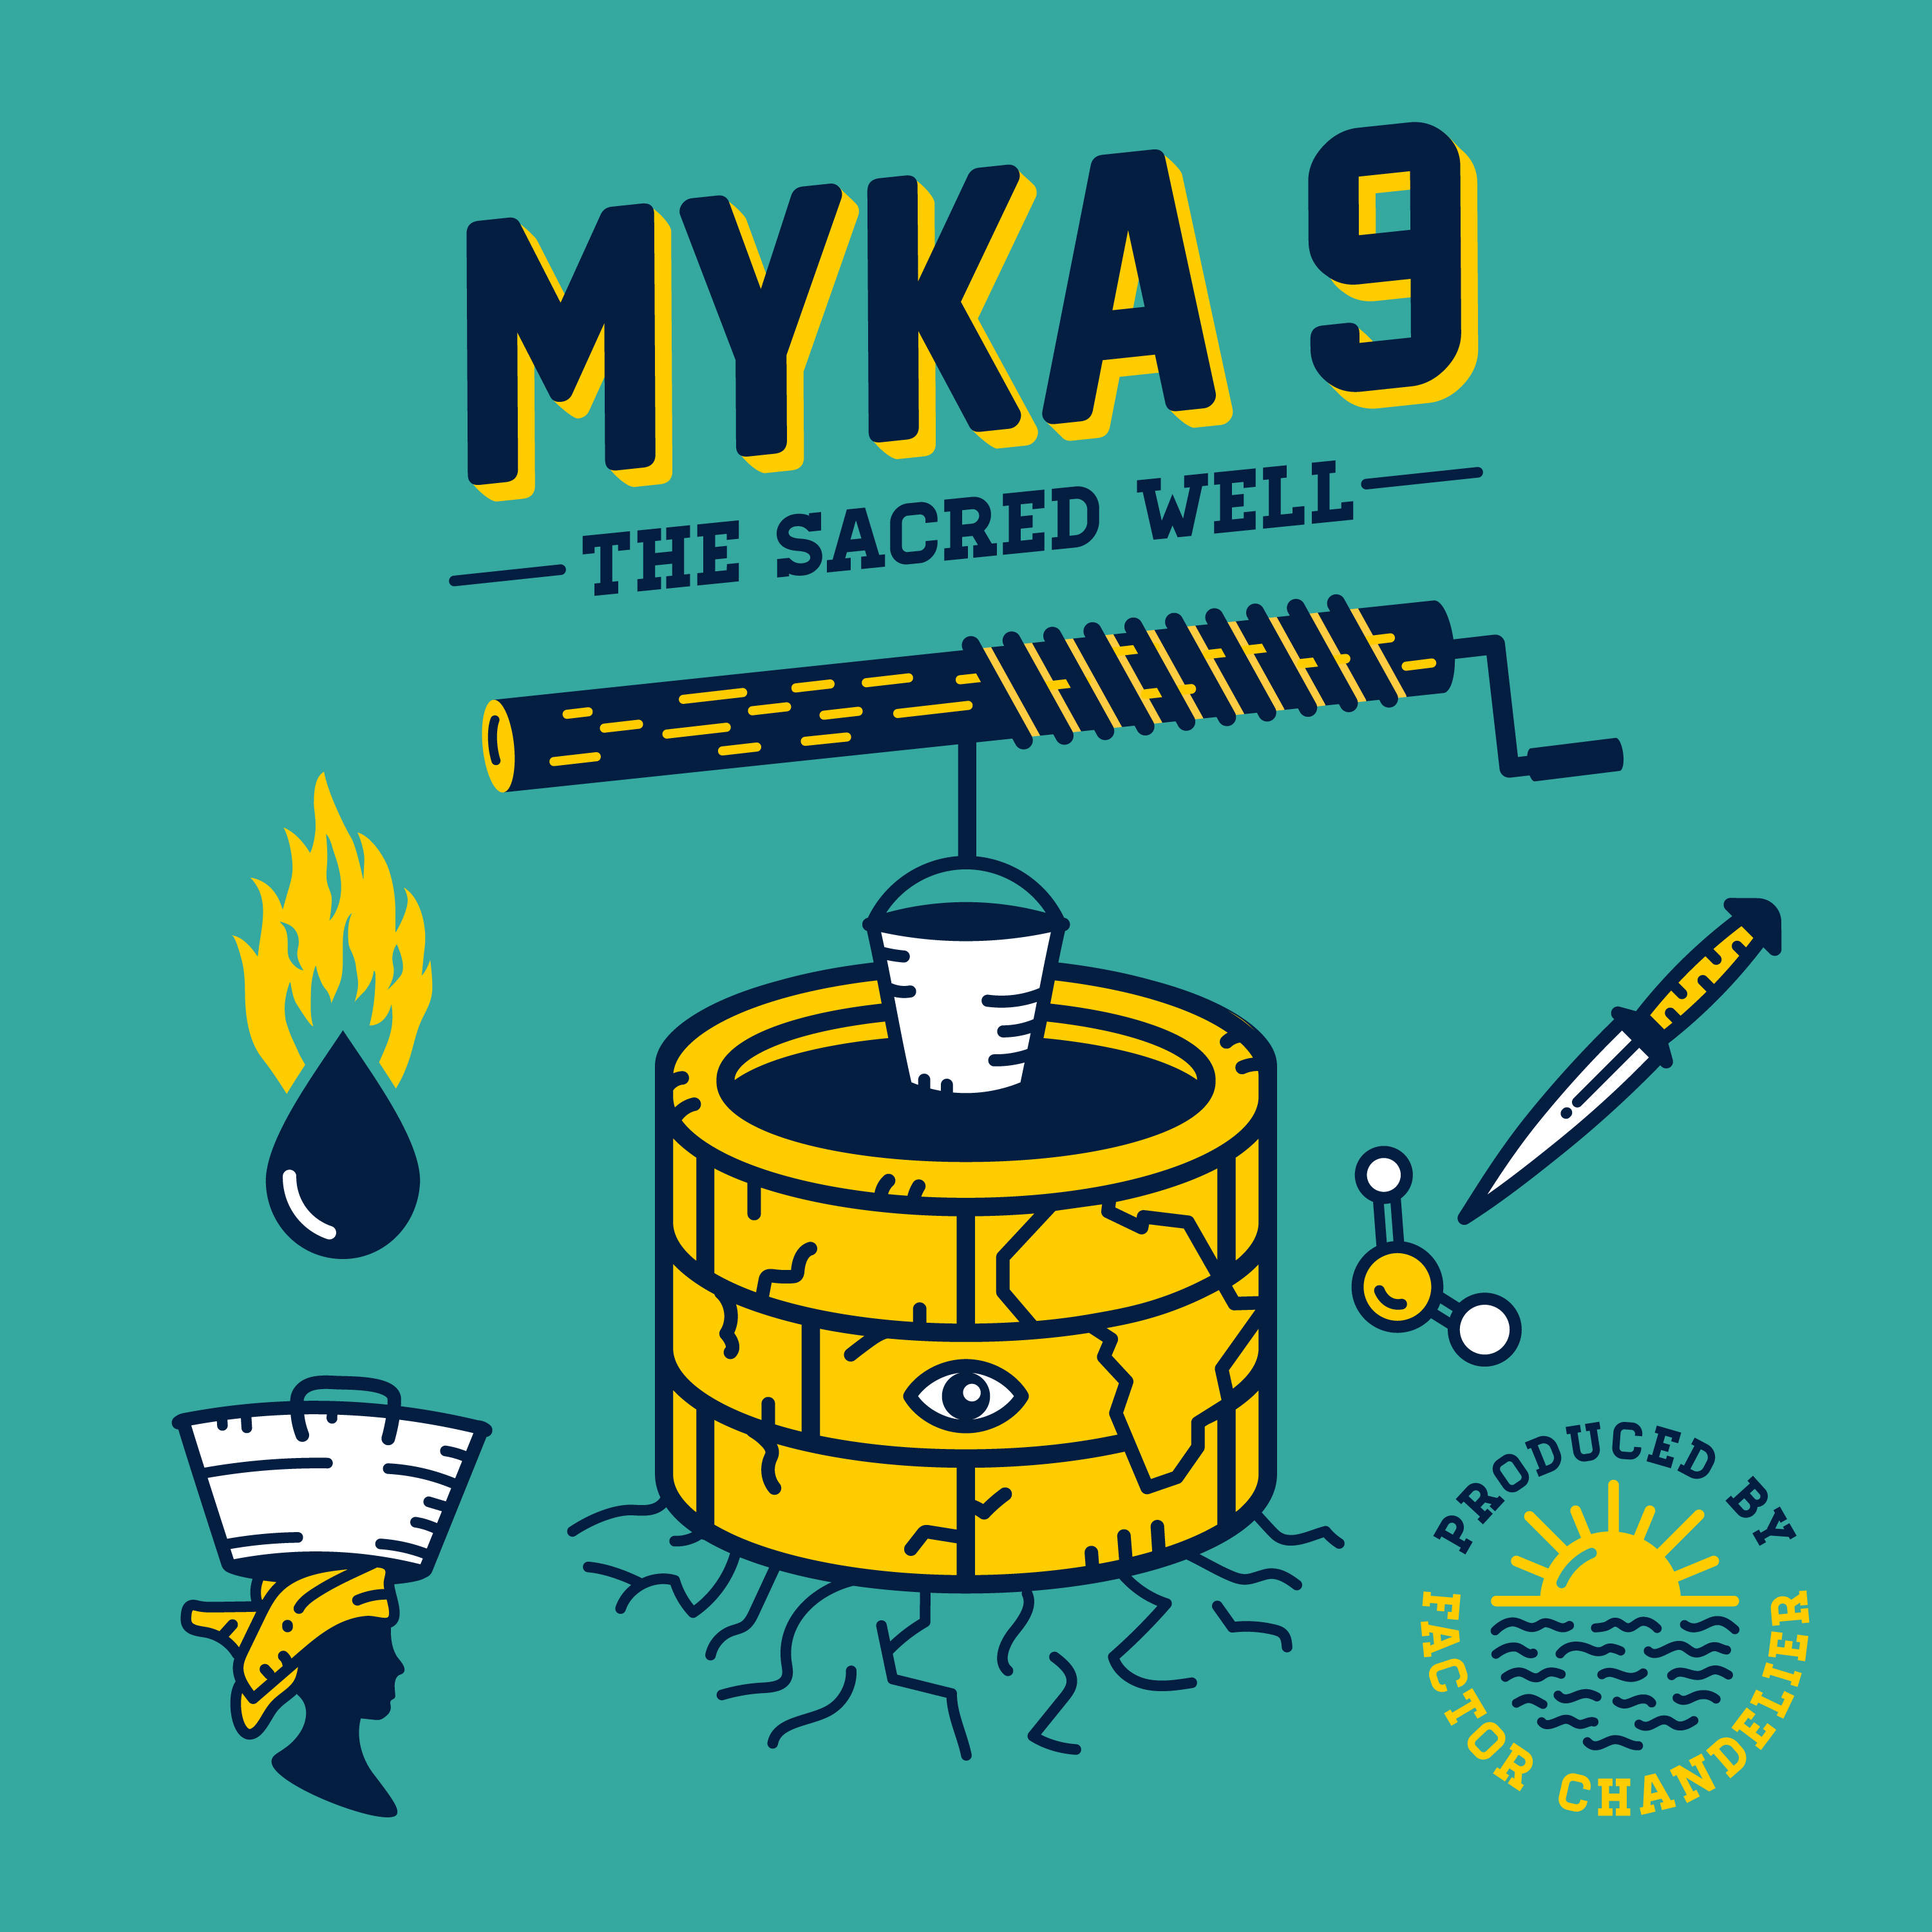 Myka 9 – “The Sacred Well” prod. Factor Chandelier